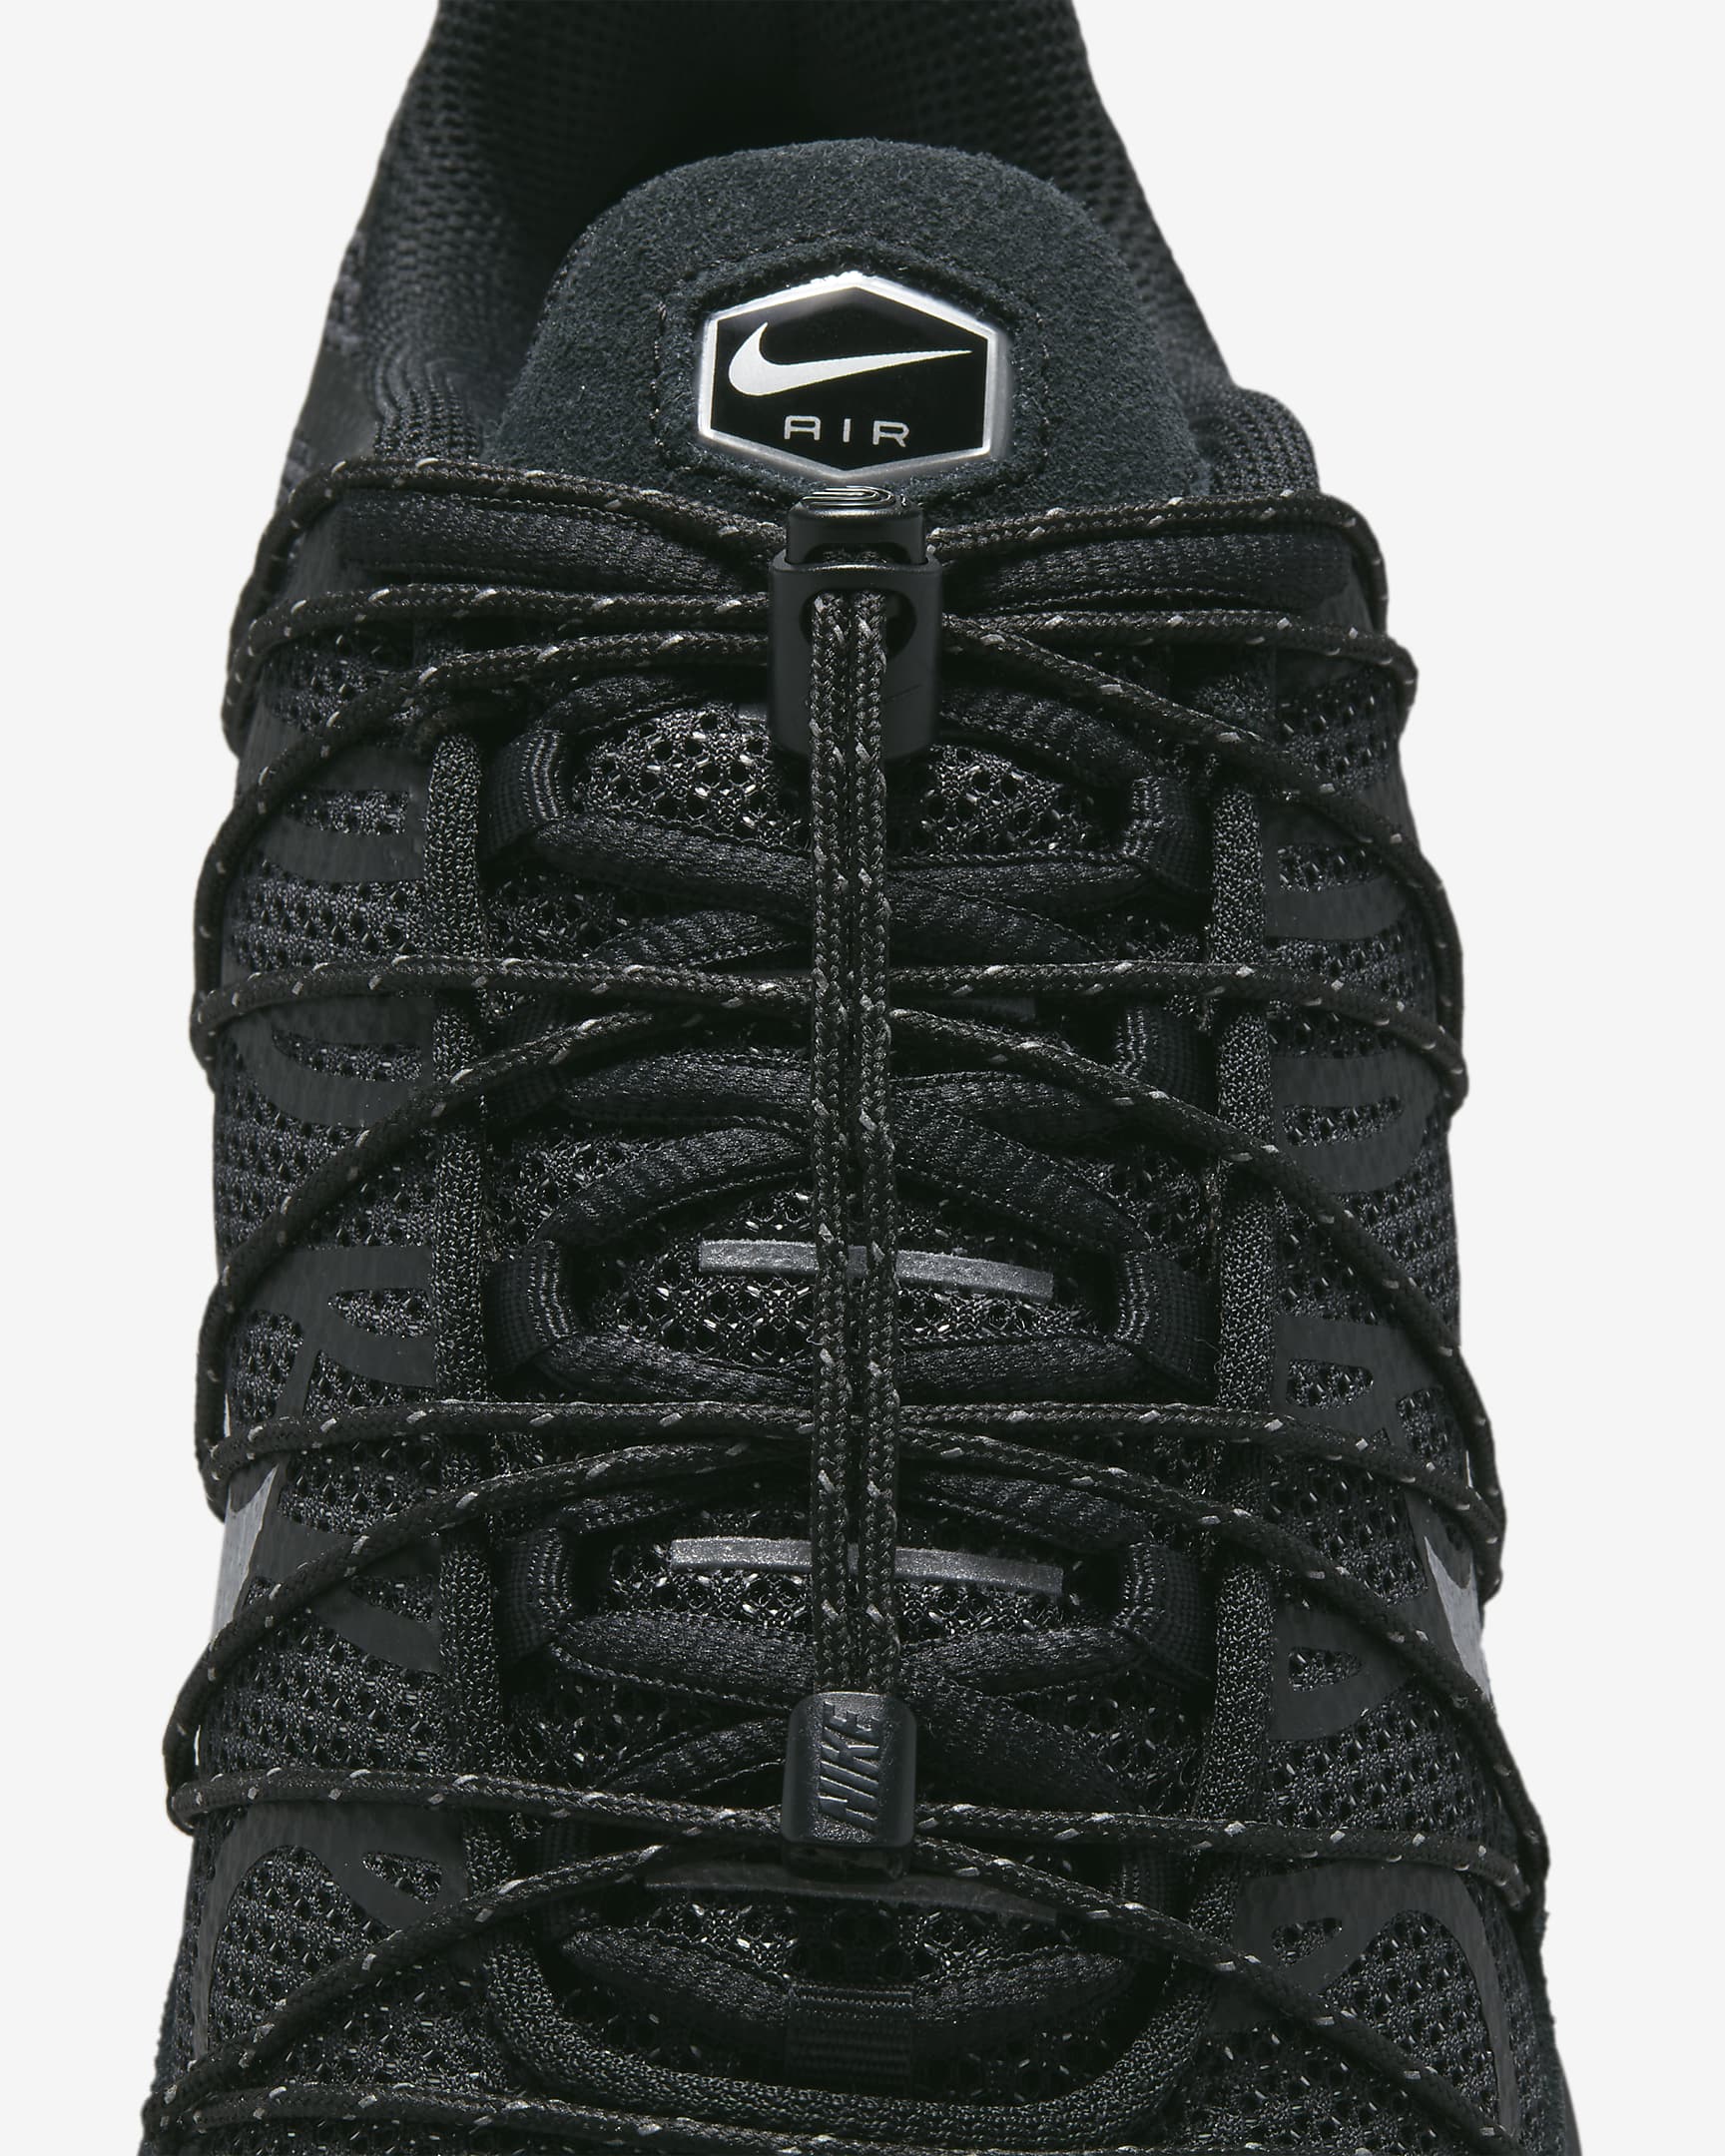 Nike Air Max Plus Utility Men's Shoes - Black/White/Metallic Silver